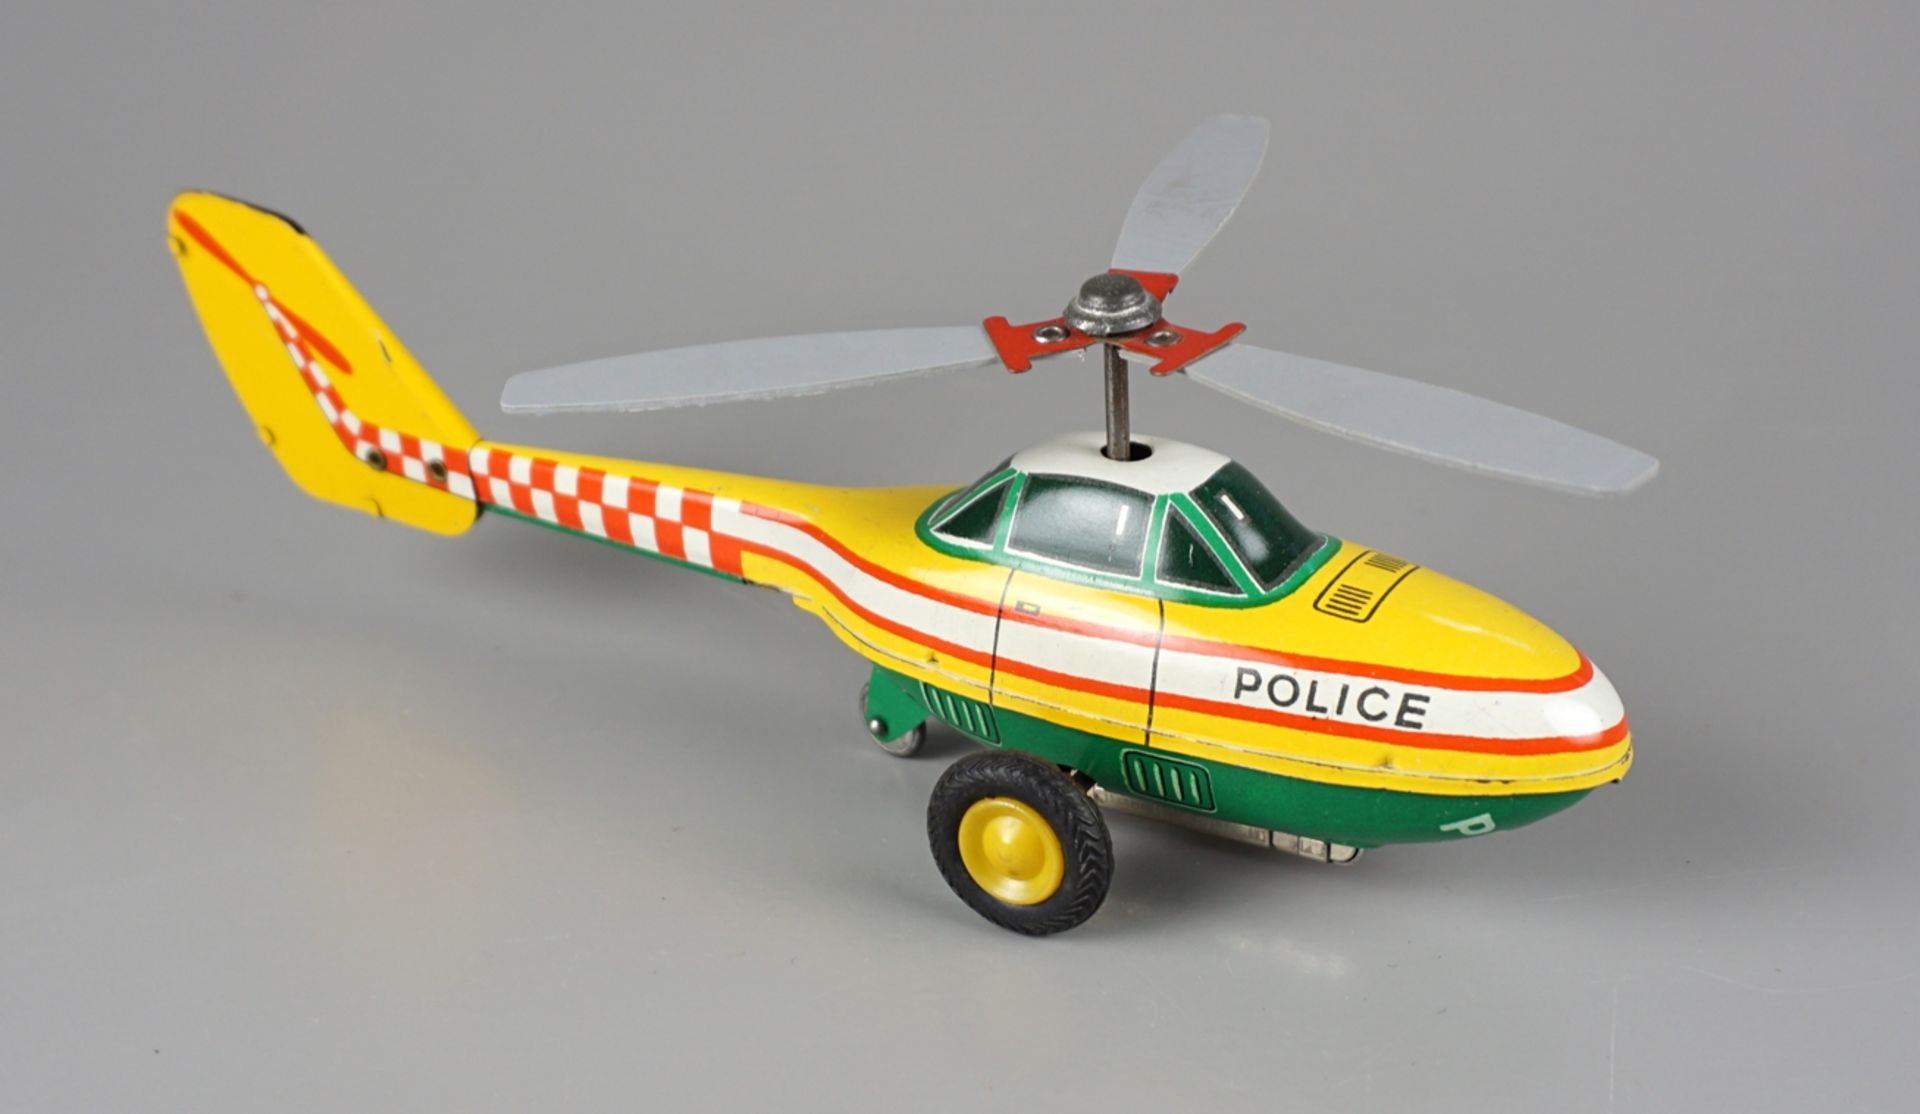 Police helicopter "Police", GDR